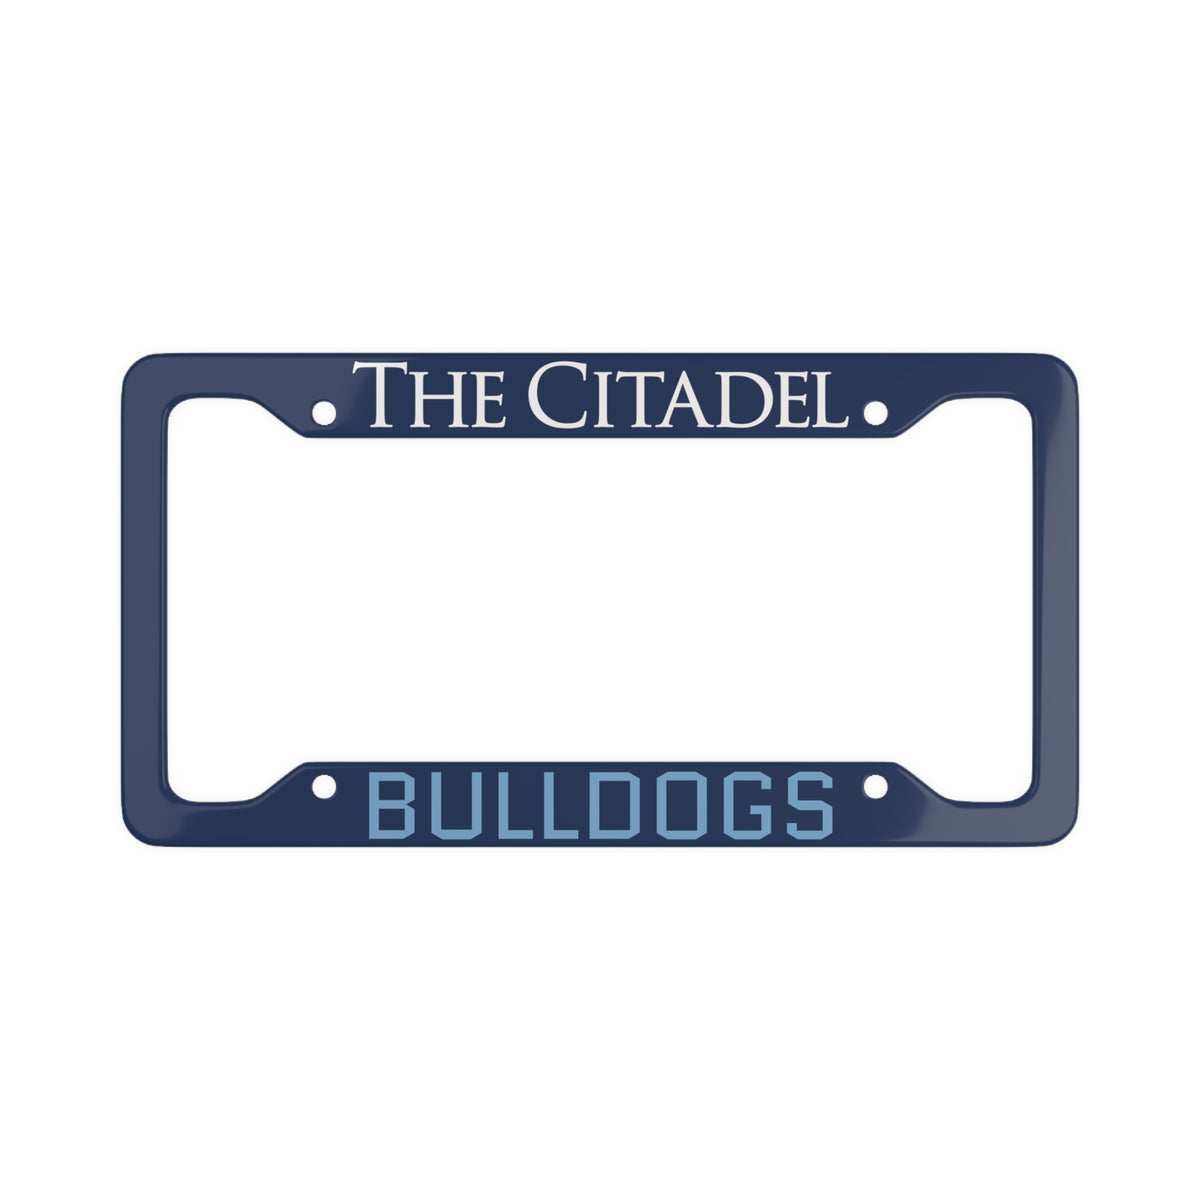 The Citadel Bulldogs License Plate Frame